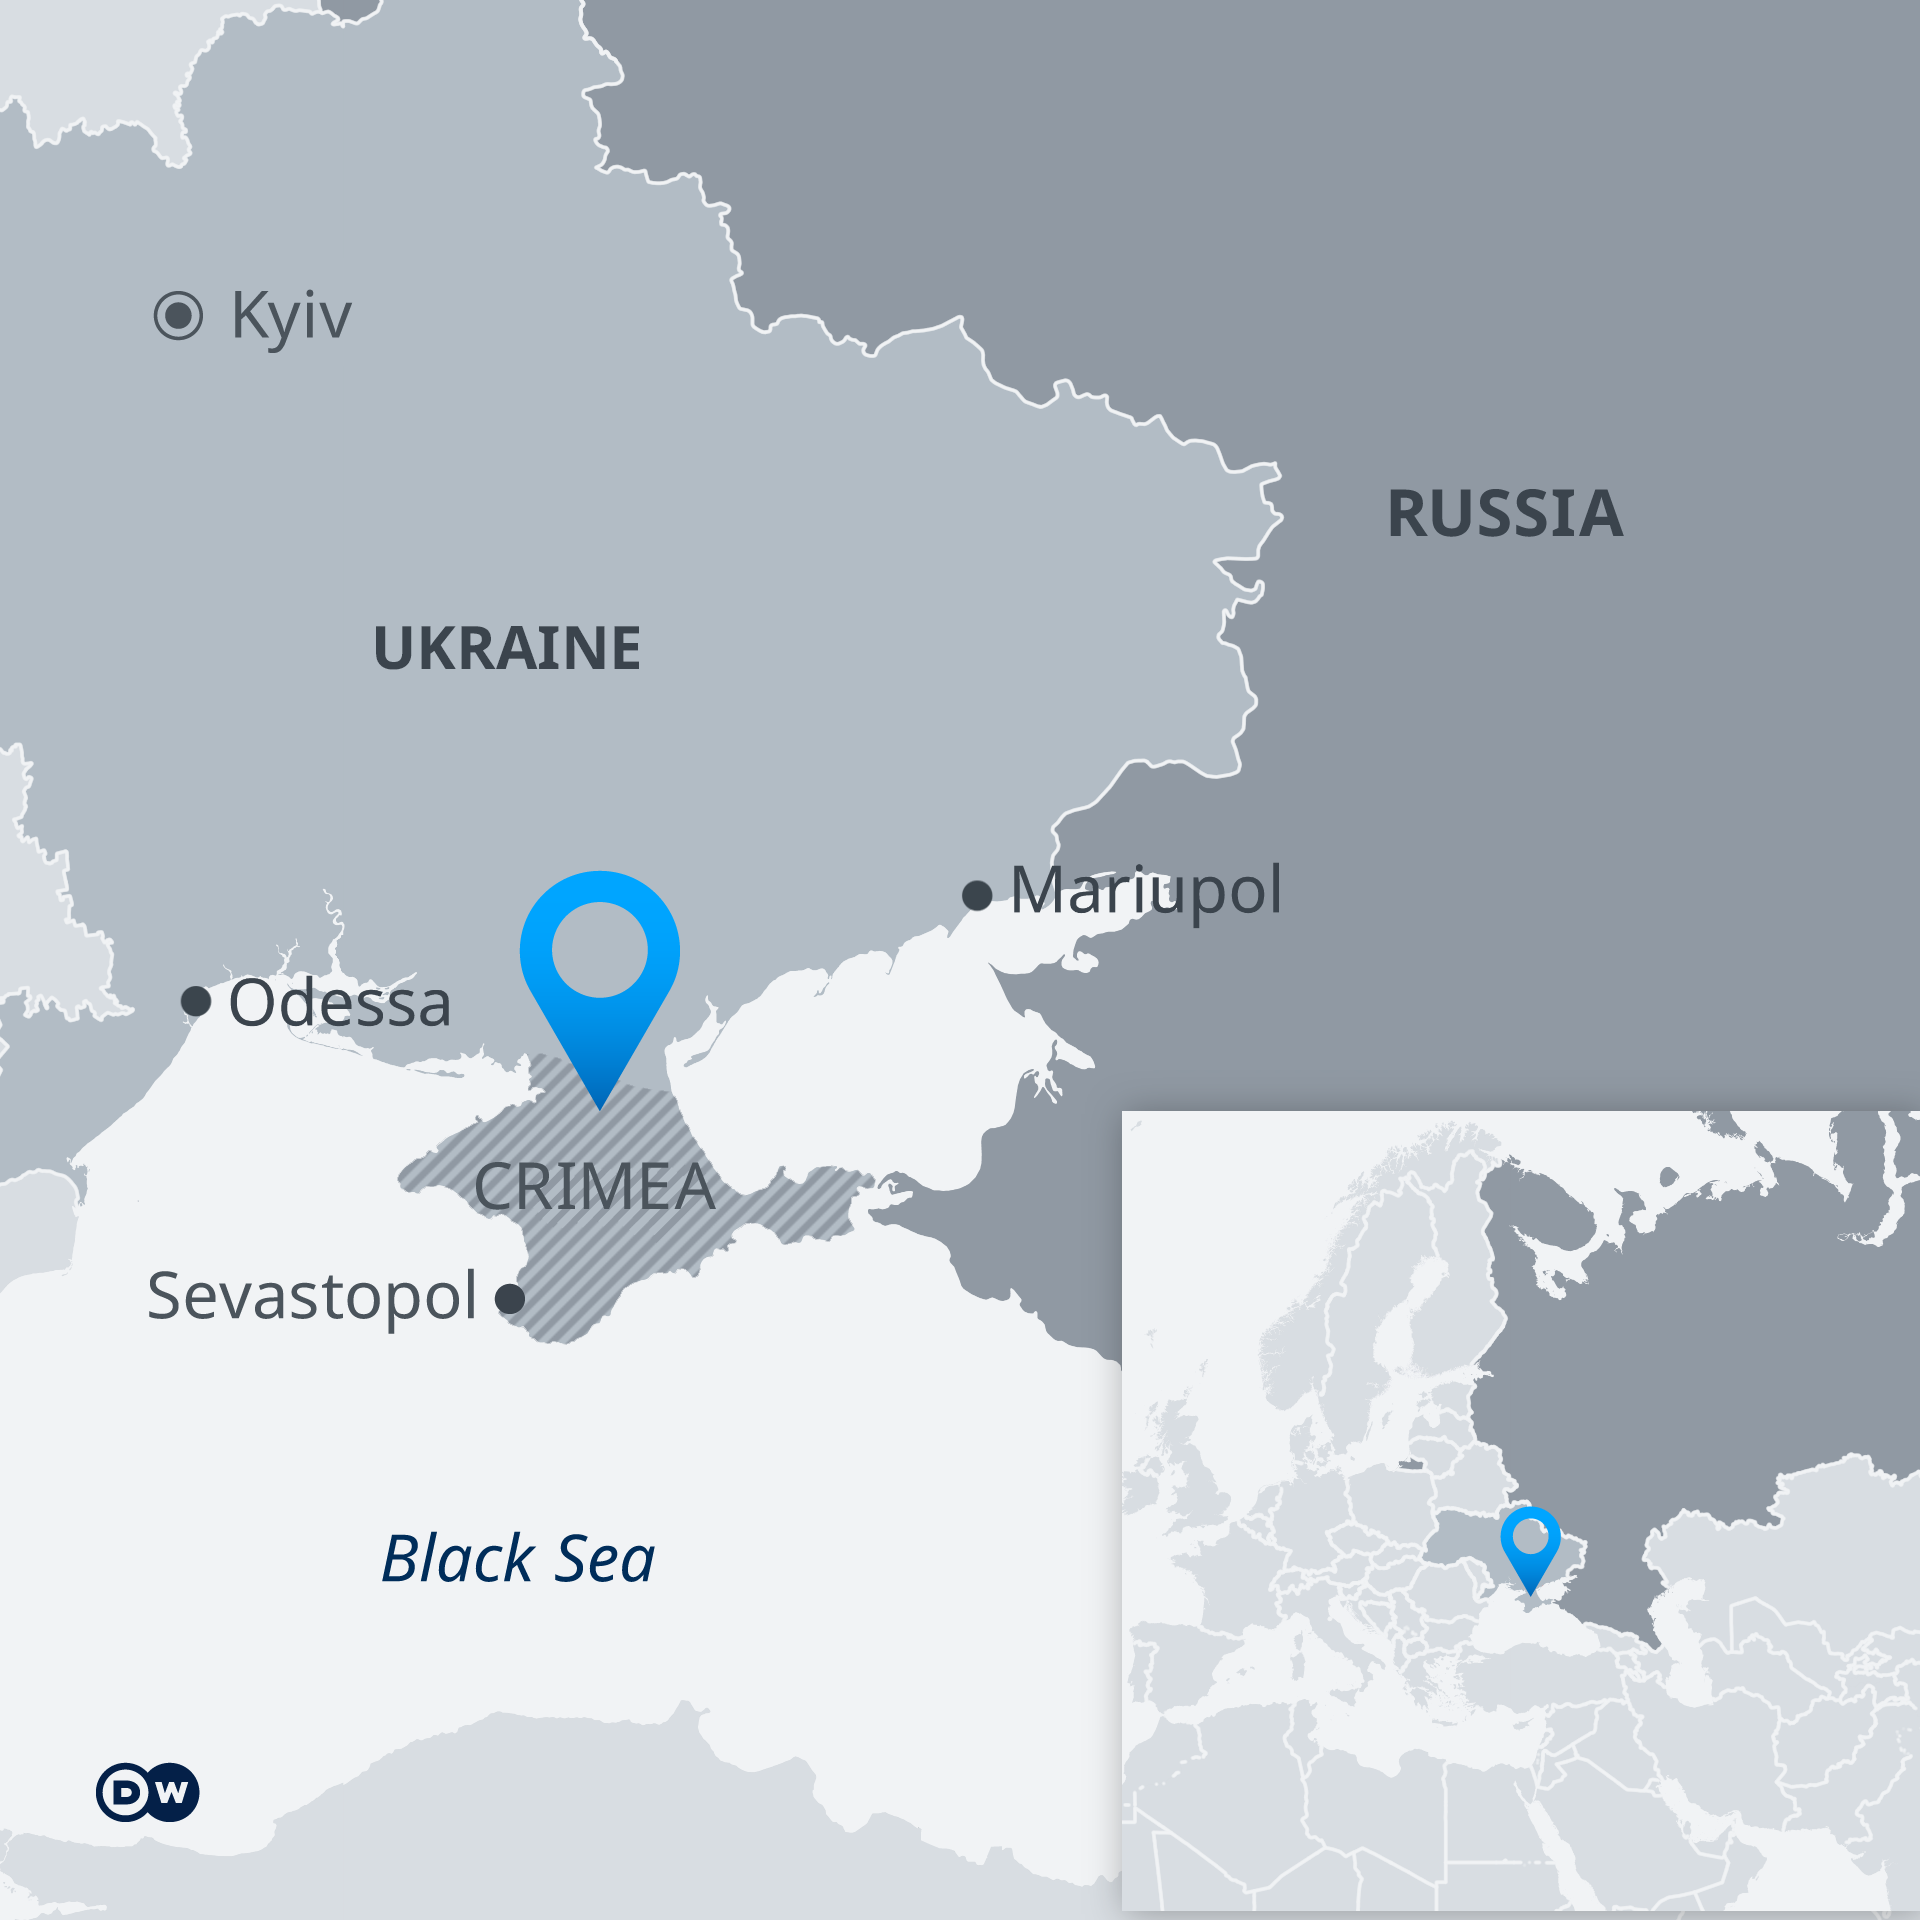 Map of Ukraine and Crimean Peninsula